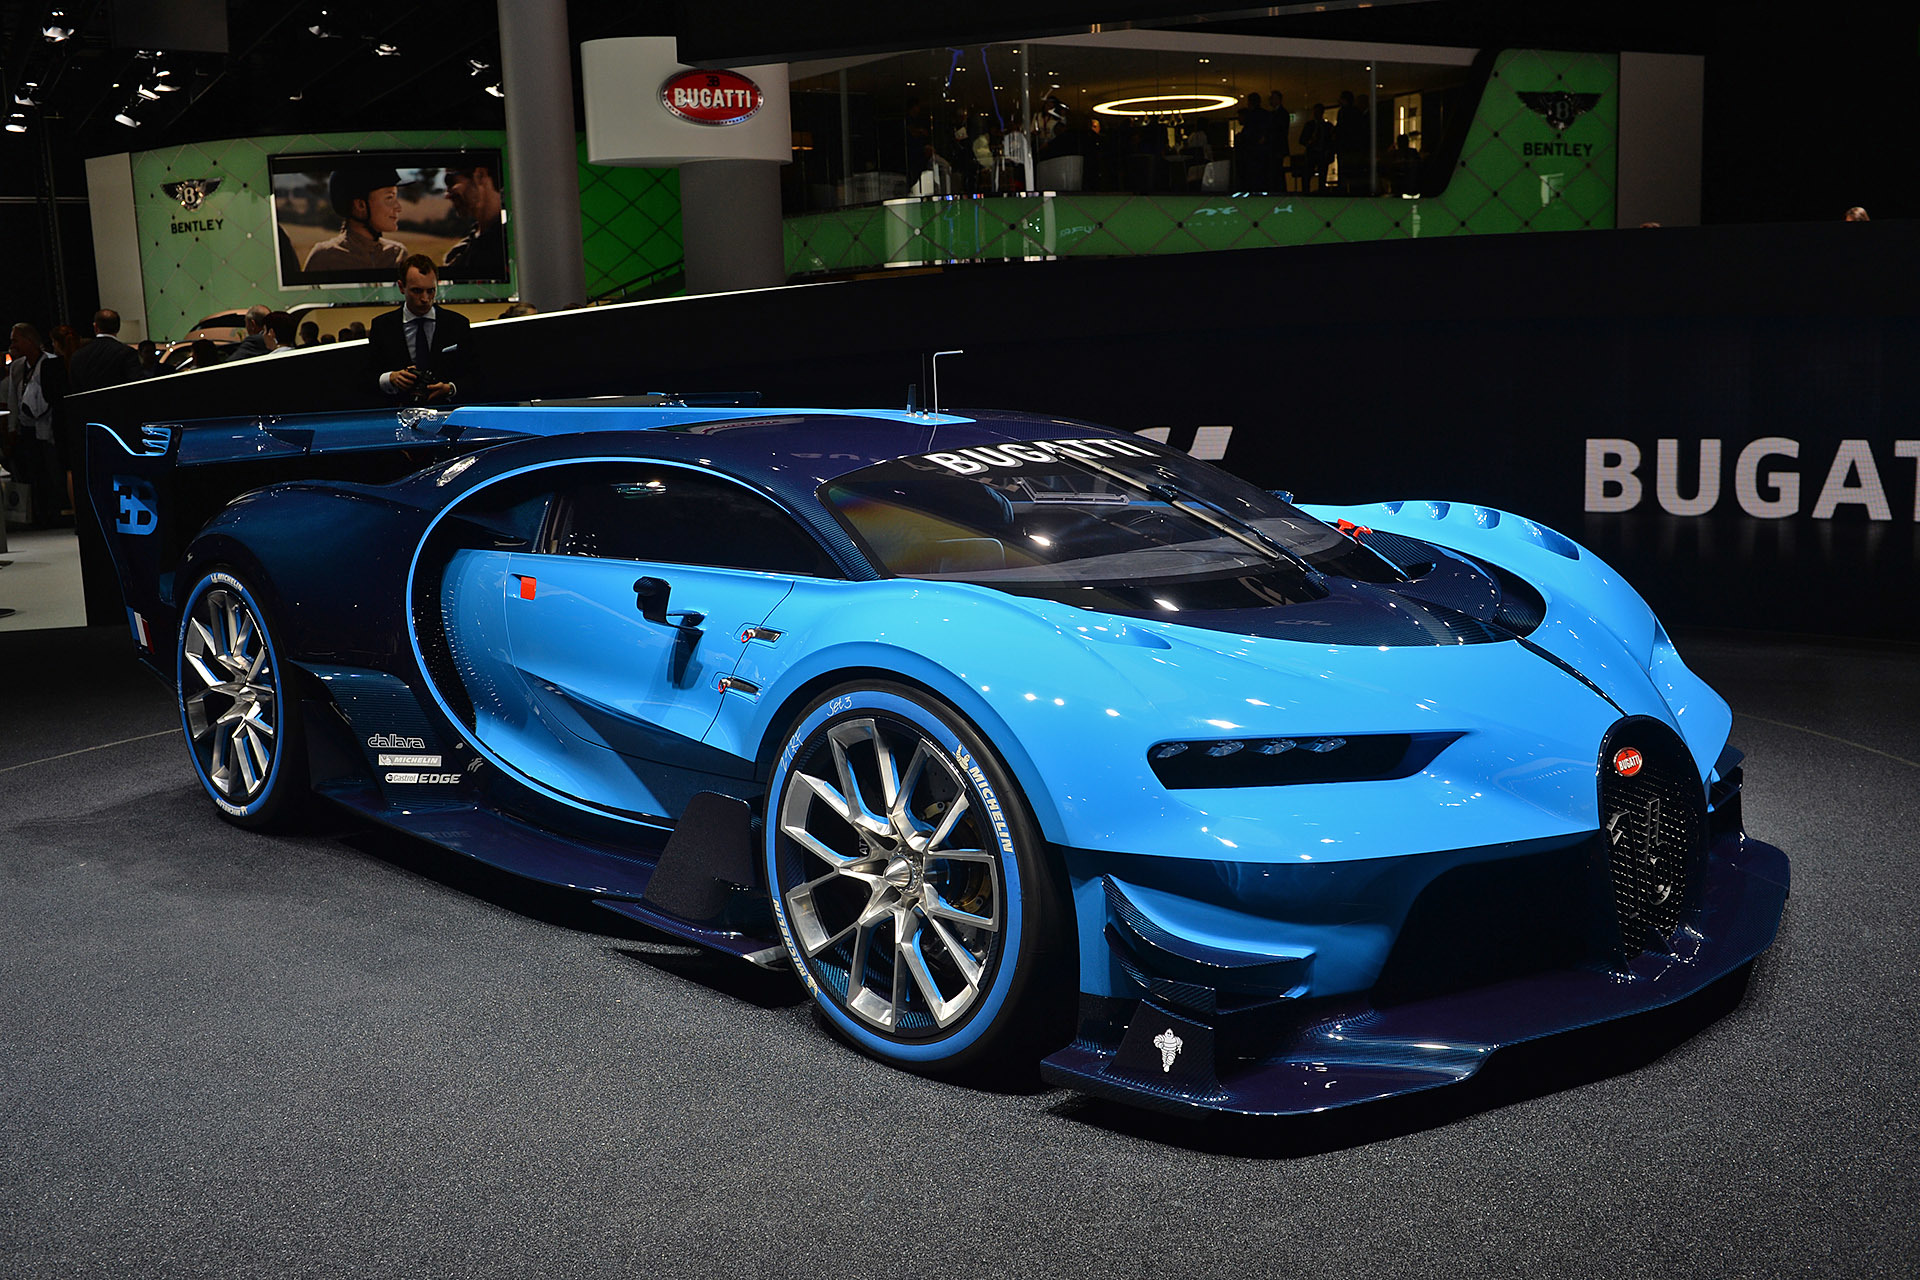 http://www.musclecarszone.com/wp-content/uploads/2015/10/bugatti-vision-turismo-concept-1.jpg